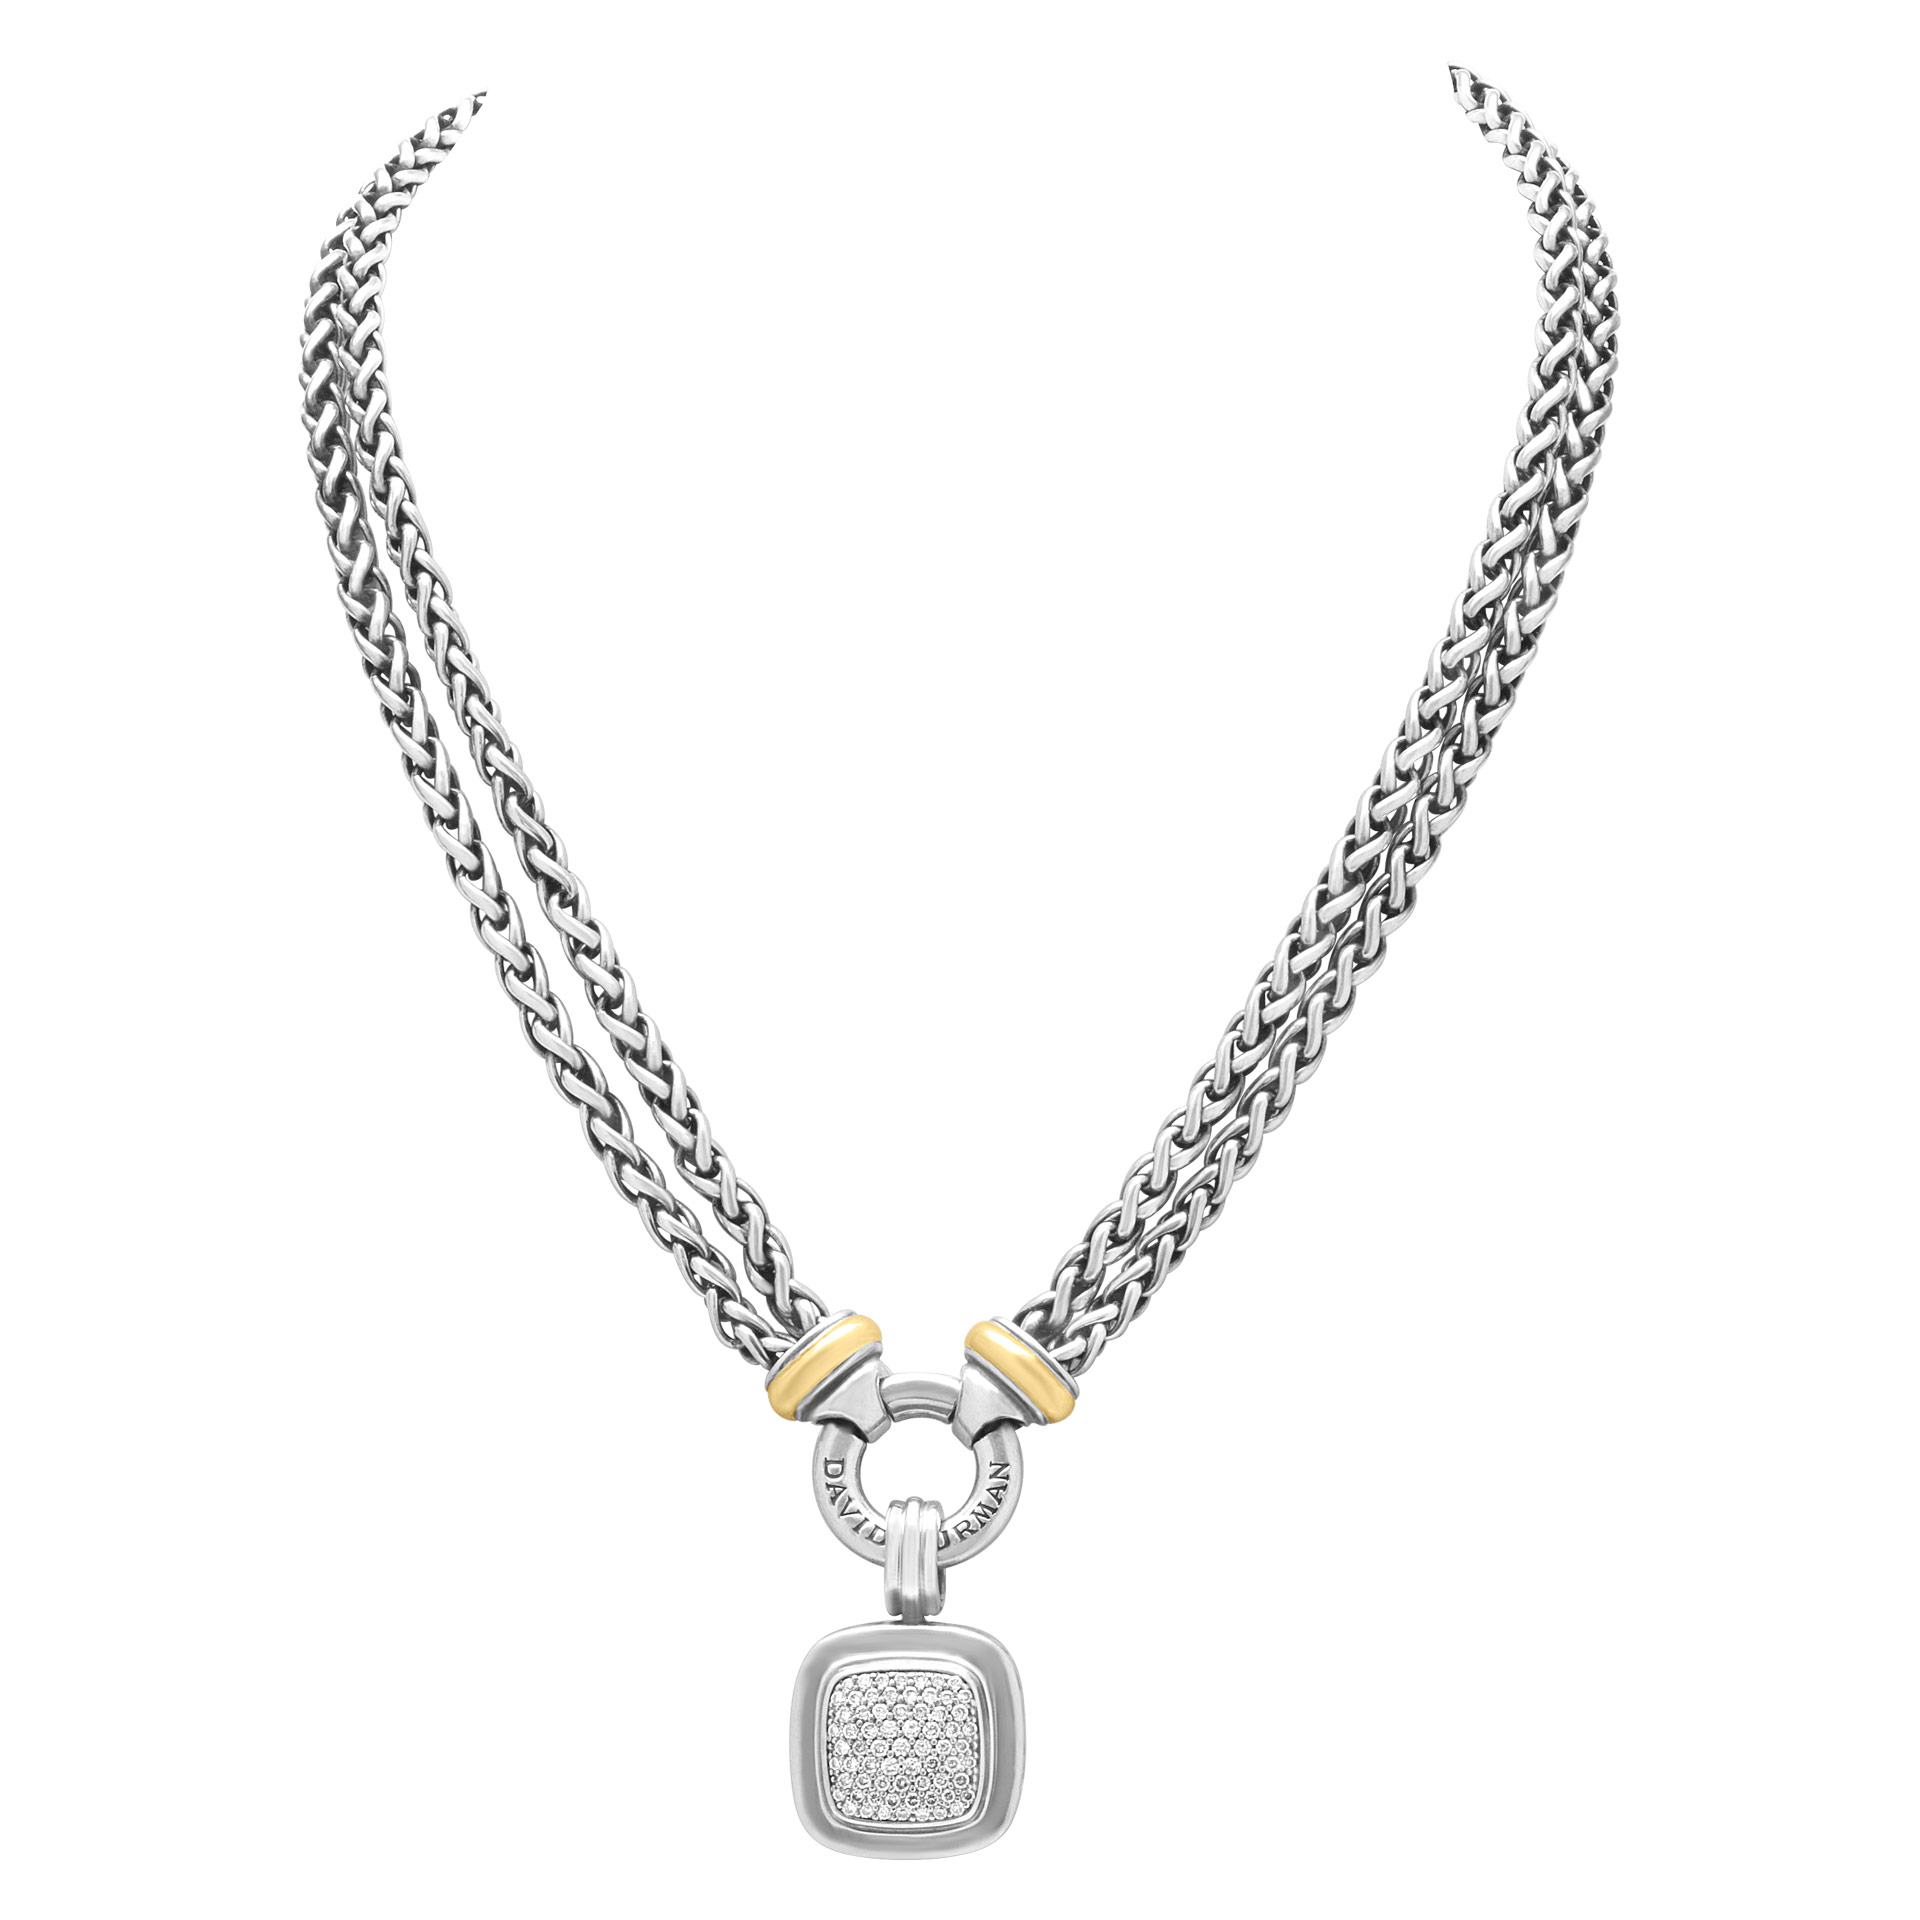 David Yurman double chain necklace image 2